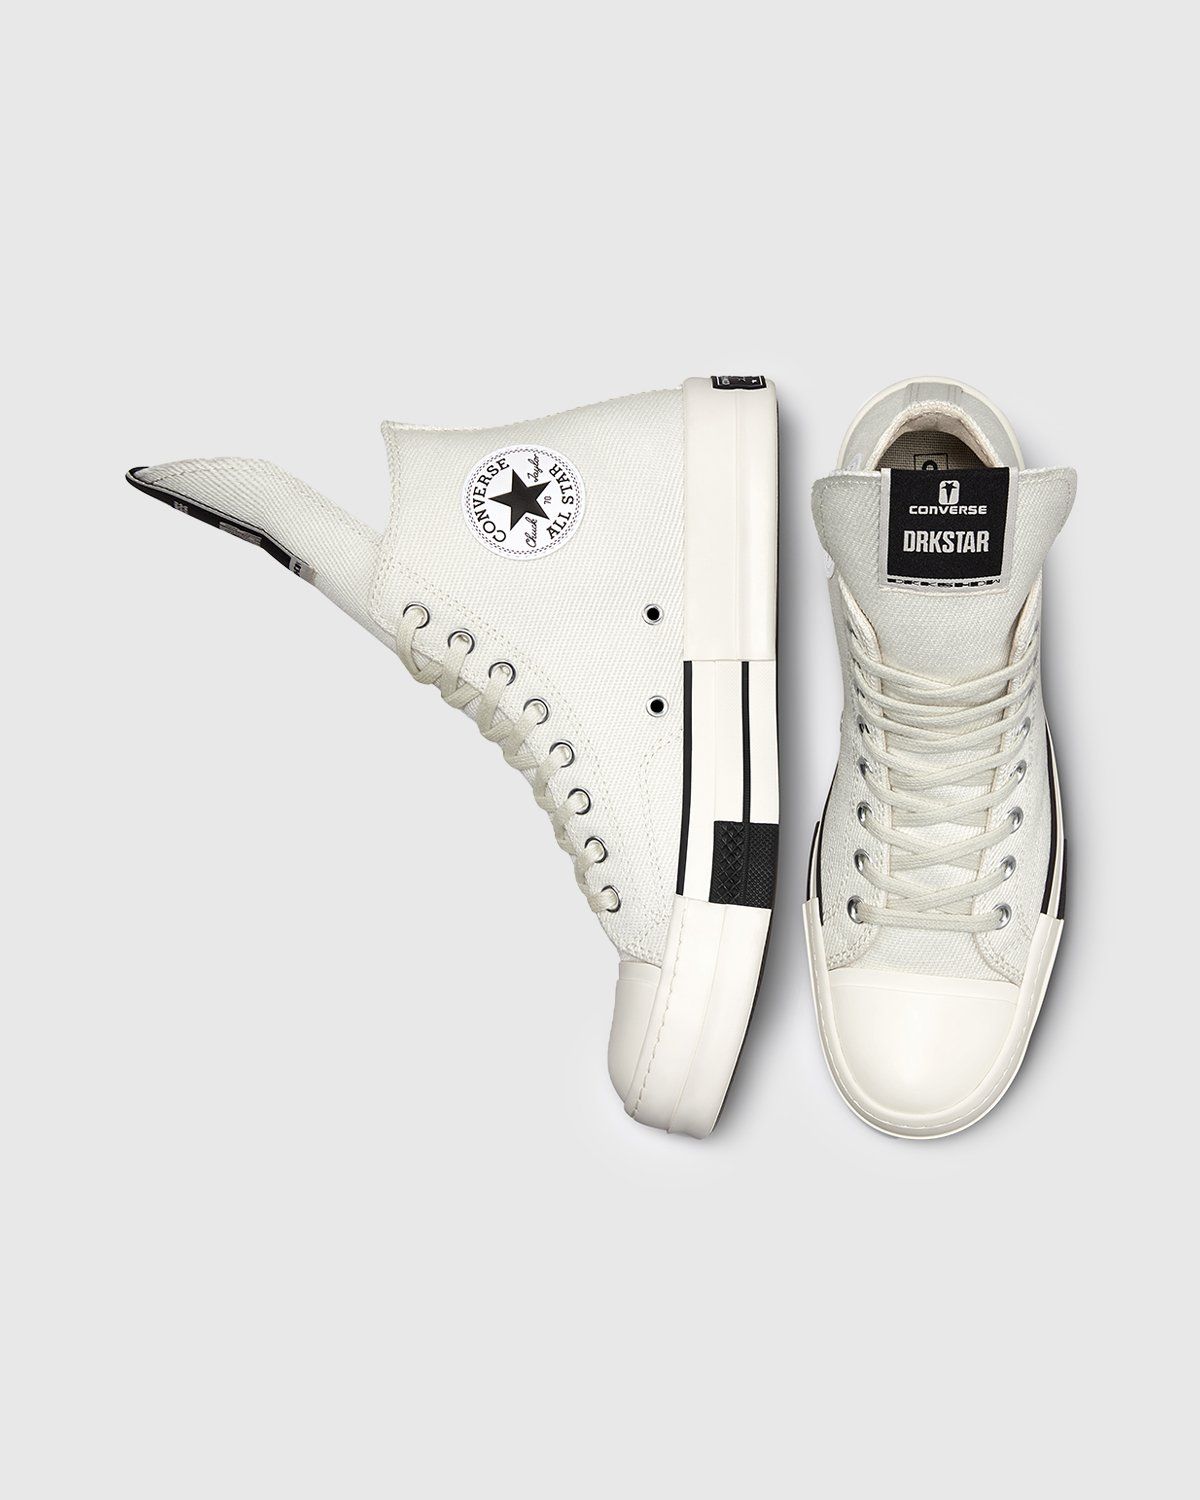 Converse x Rick Owens – DRKSTAR Chuck 70 High Lily White Egret Black - Sneakers - White - Image 4